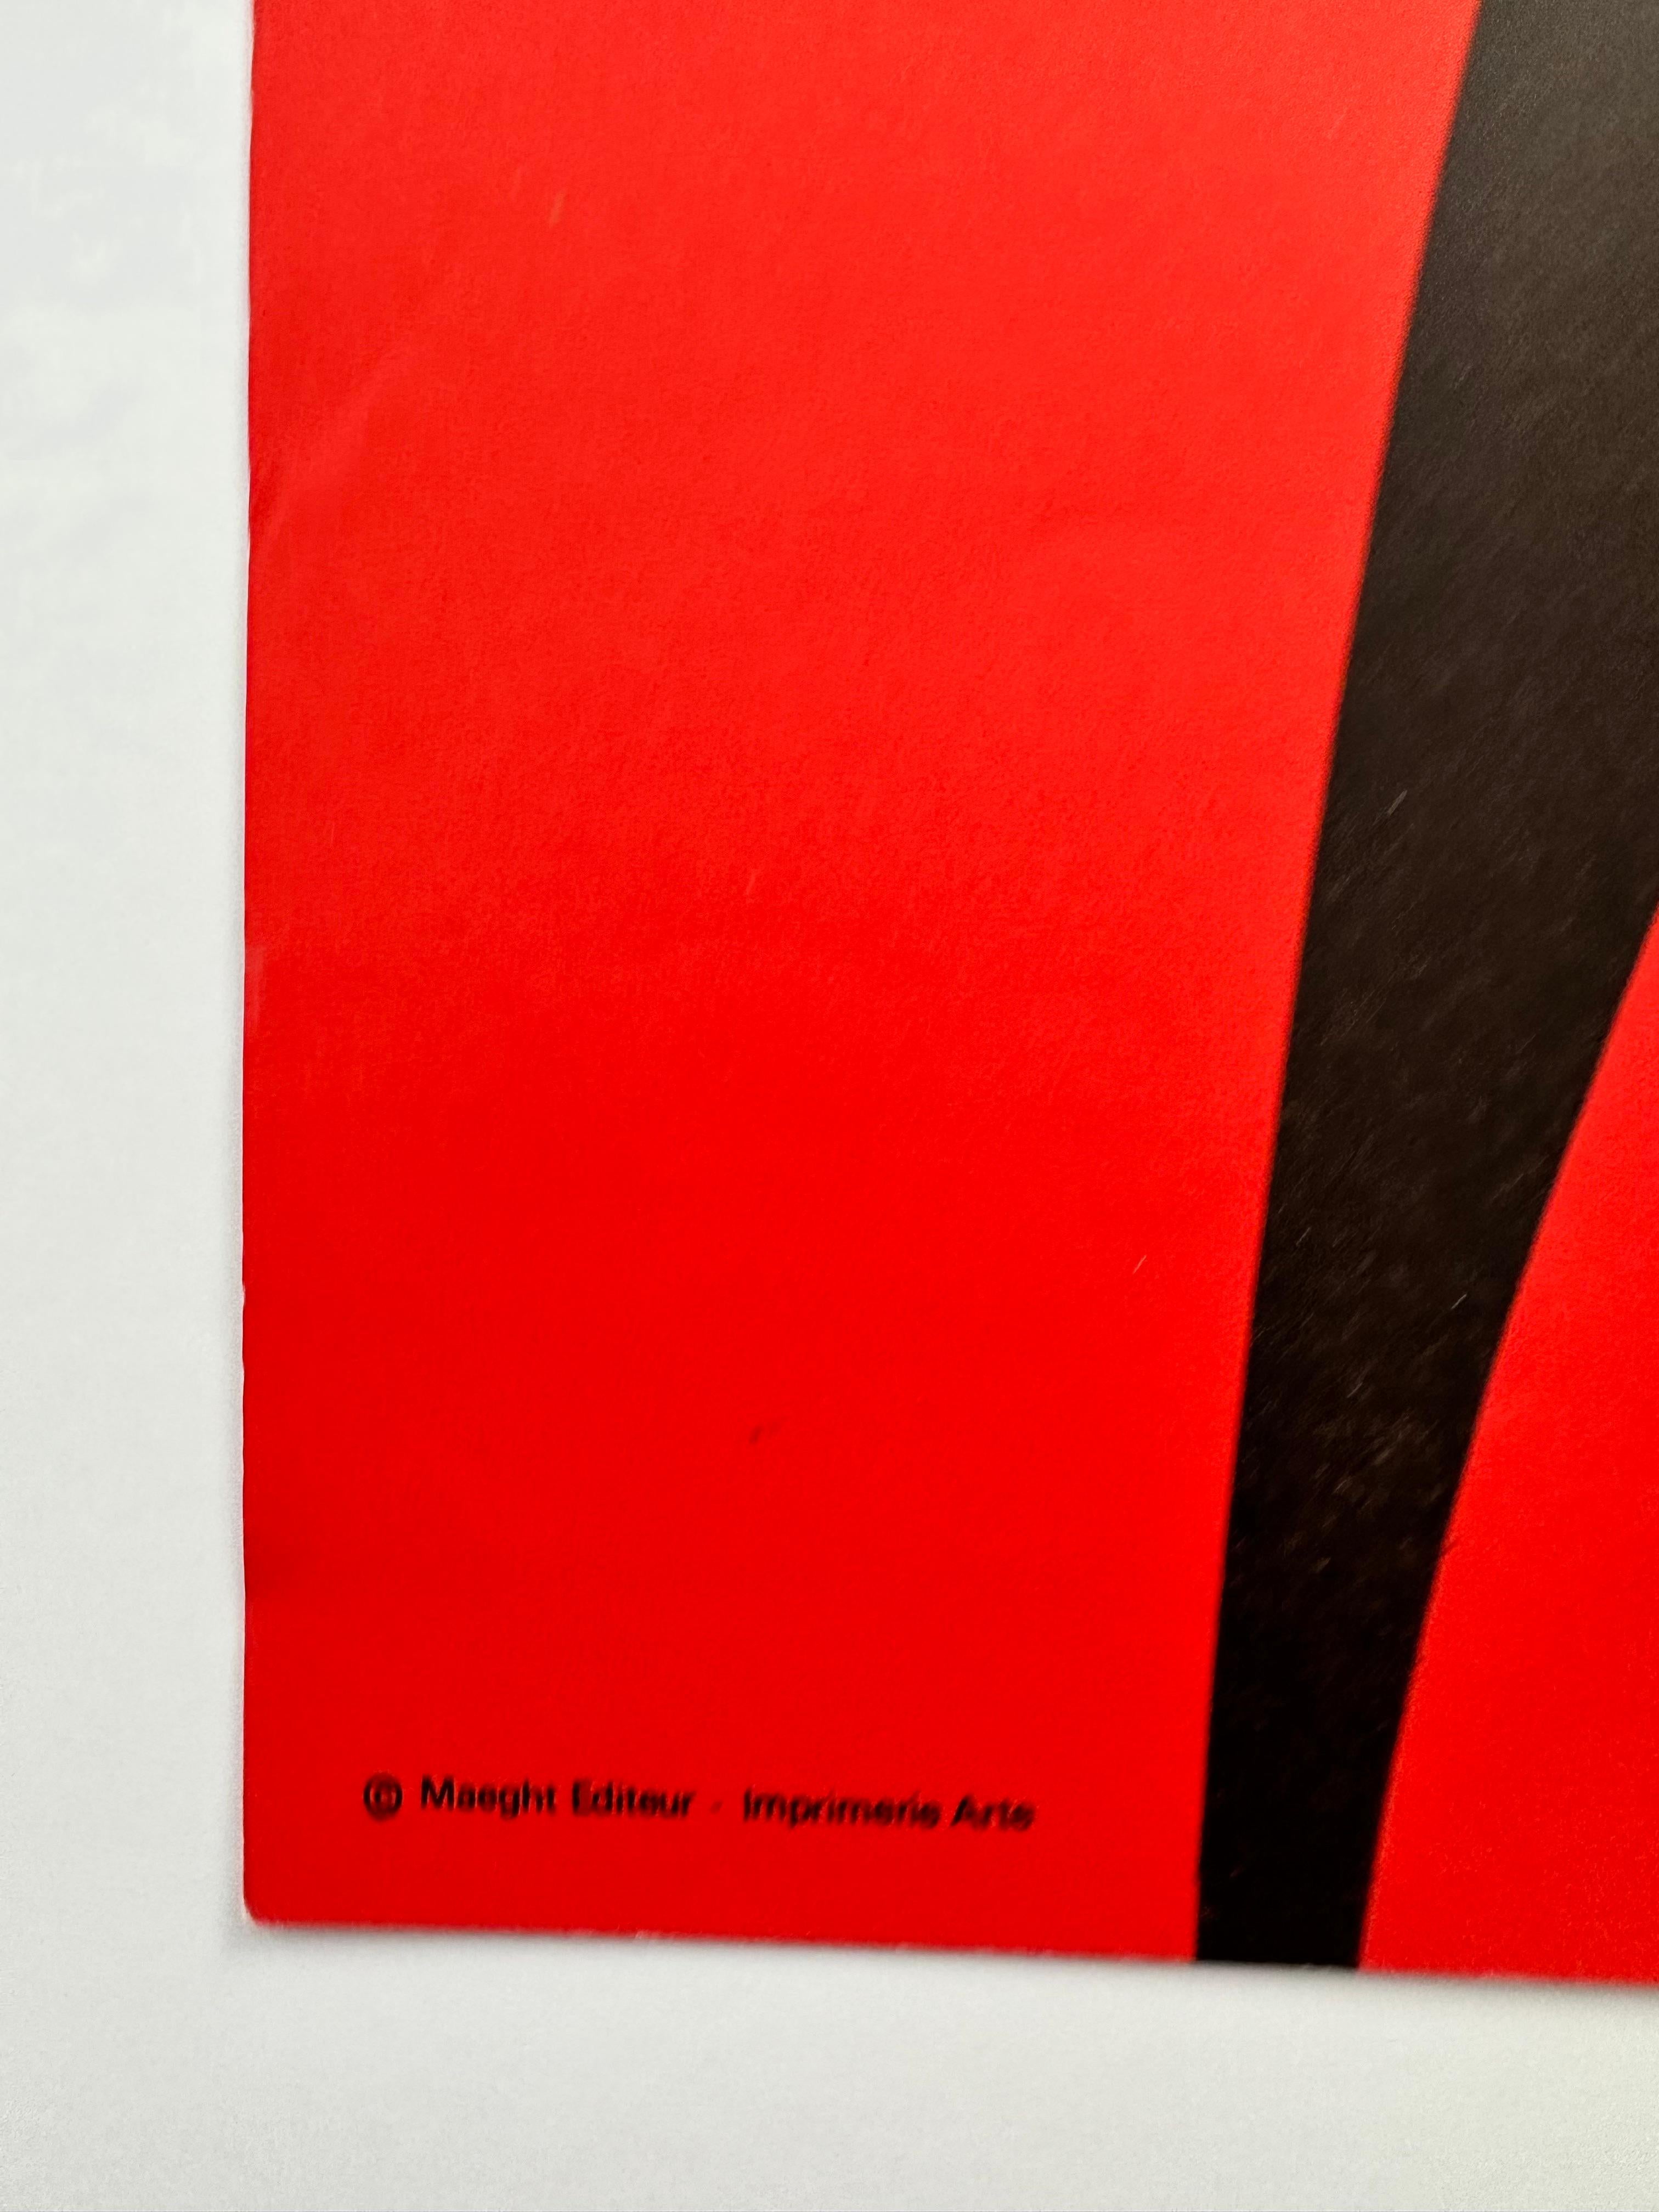 Black Shadow - Print by (after) Alexander Calder